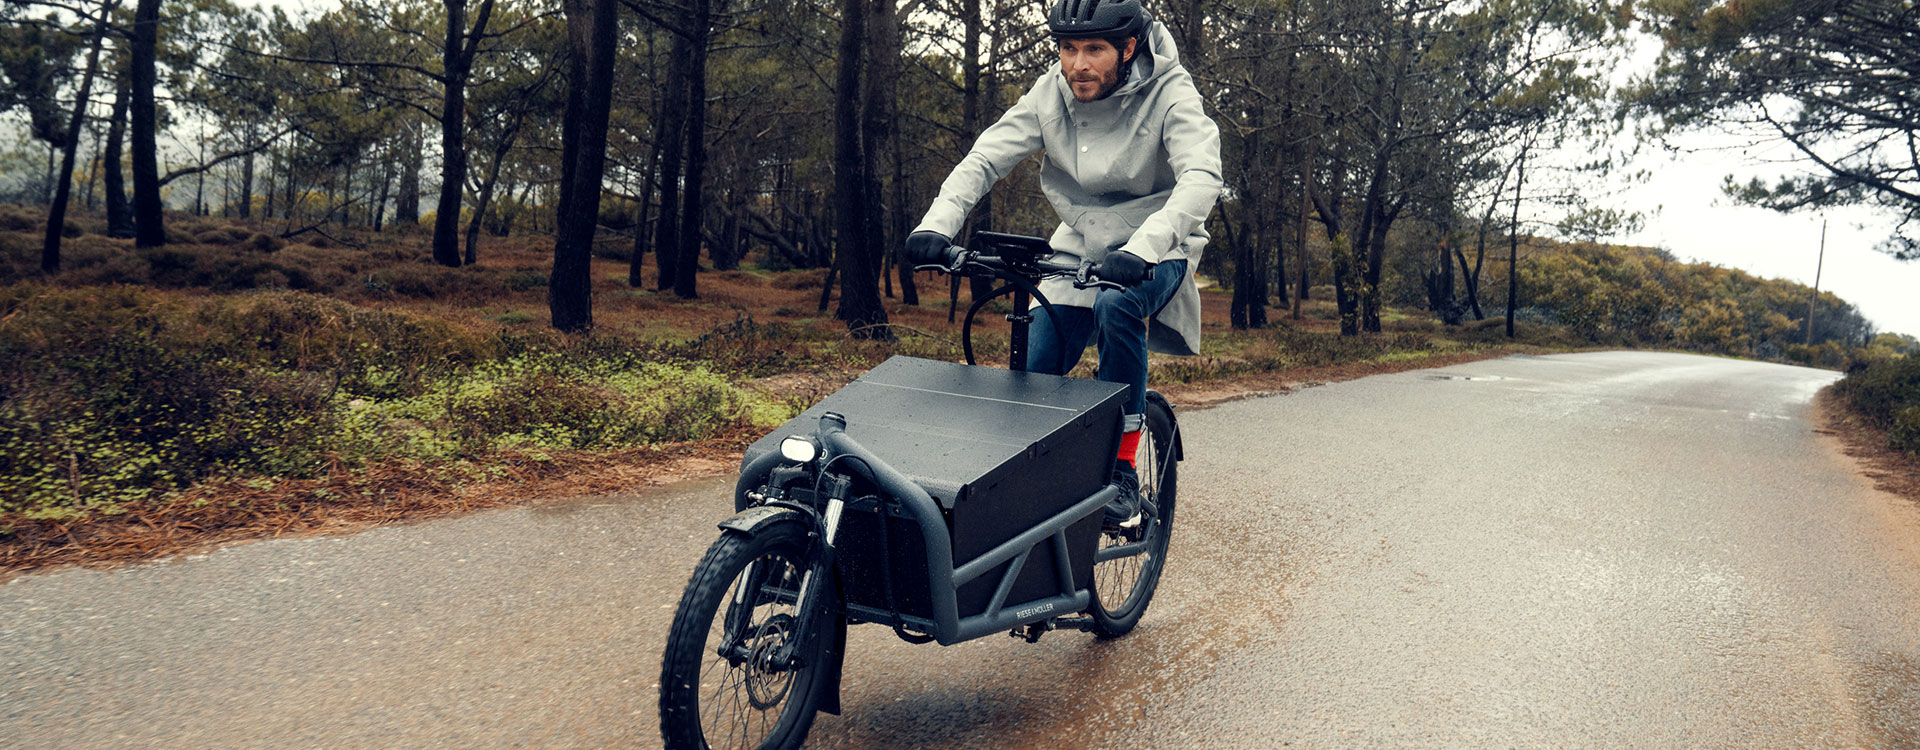 Riese & Müller Load 60 - Premium e-bike - Elan Bikes - Elektrische bakfiets in de natuur